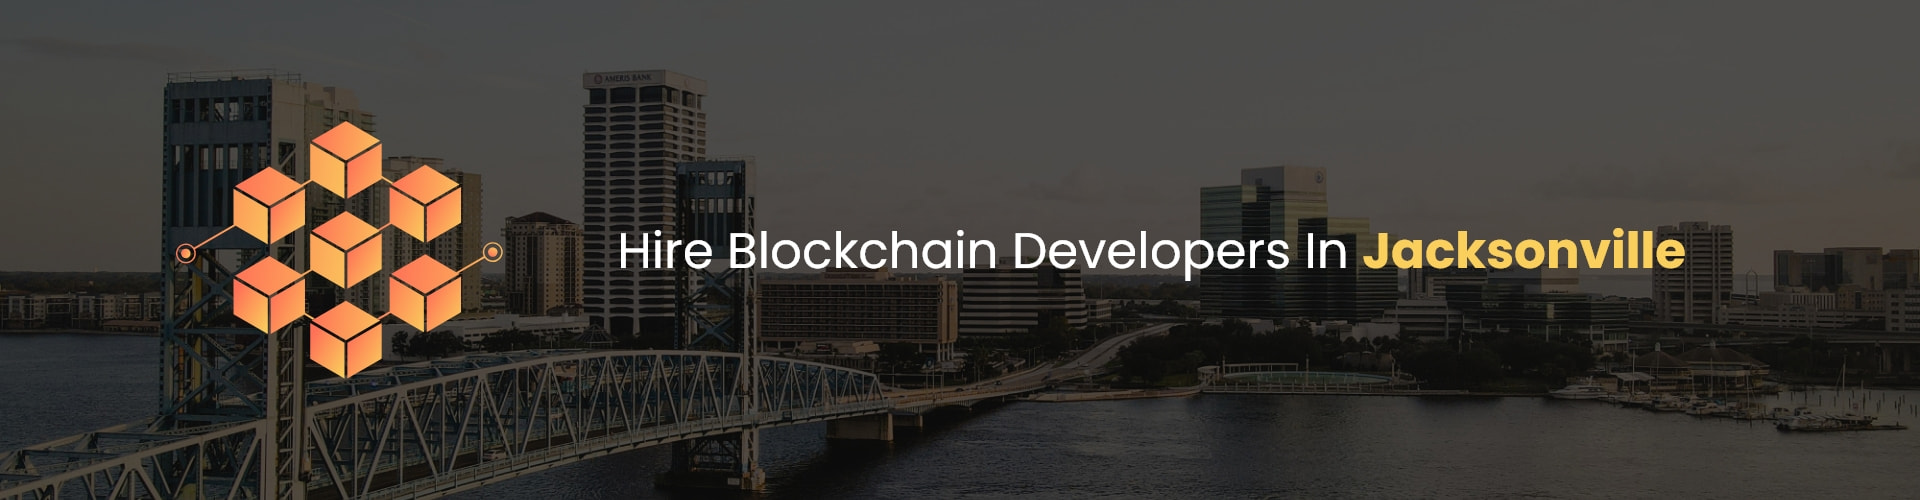 hire blockchain developers in jacksonville